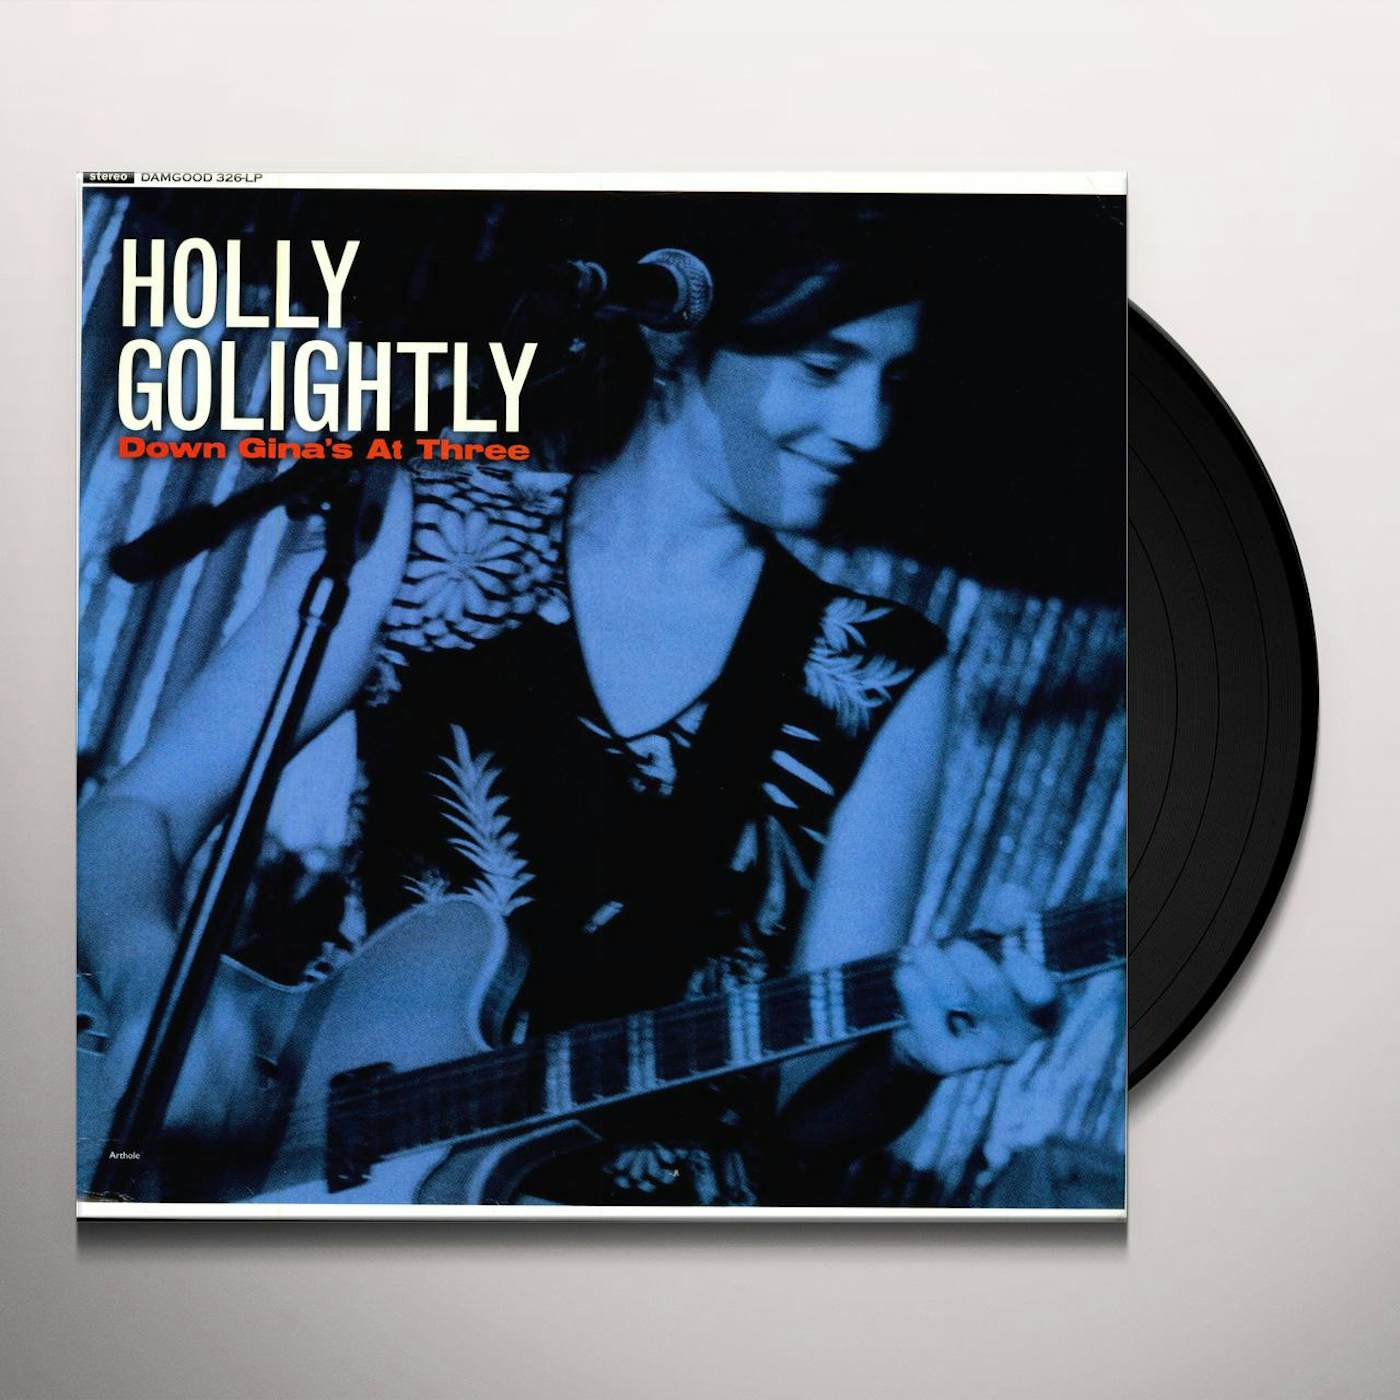 Holly Golightly Down Gina's At 3 Vinyl Record